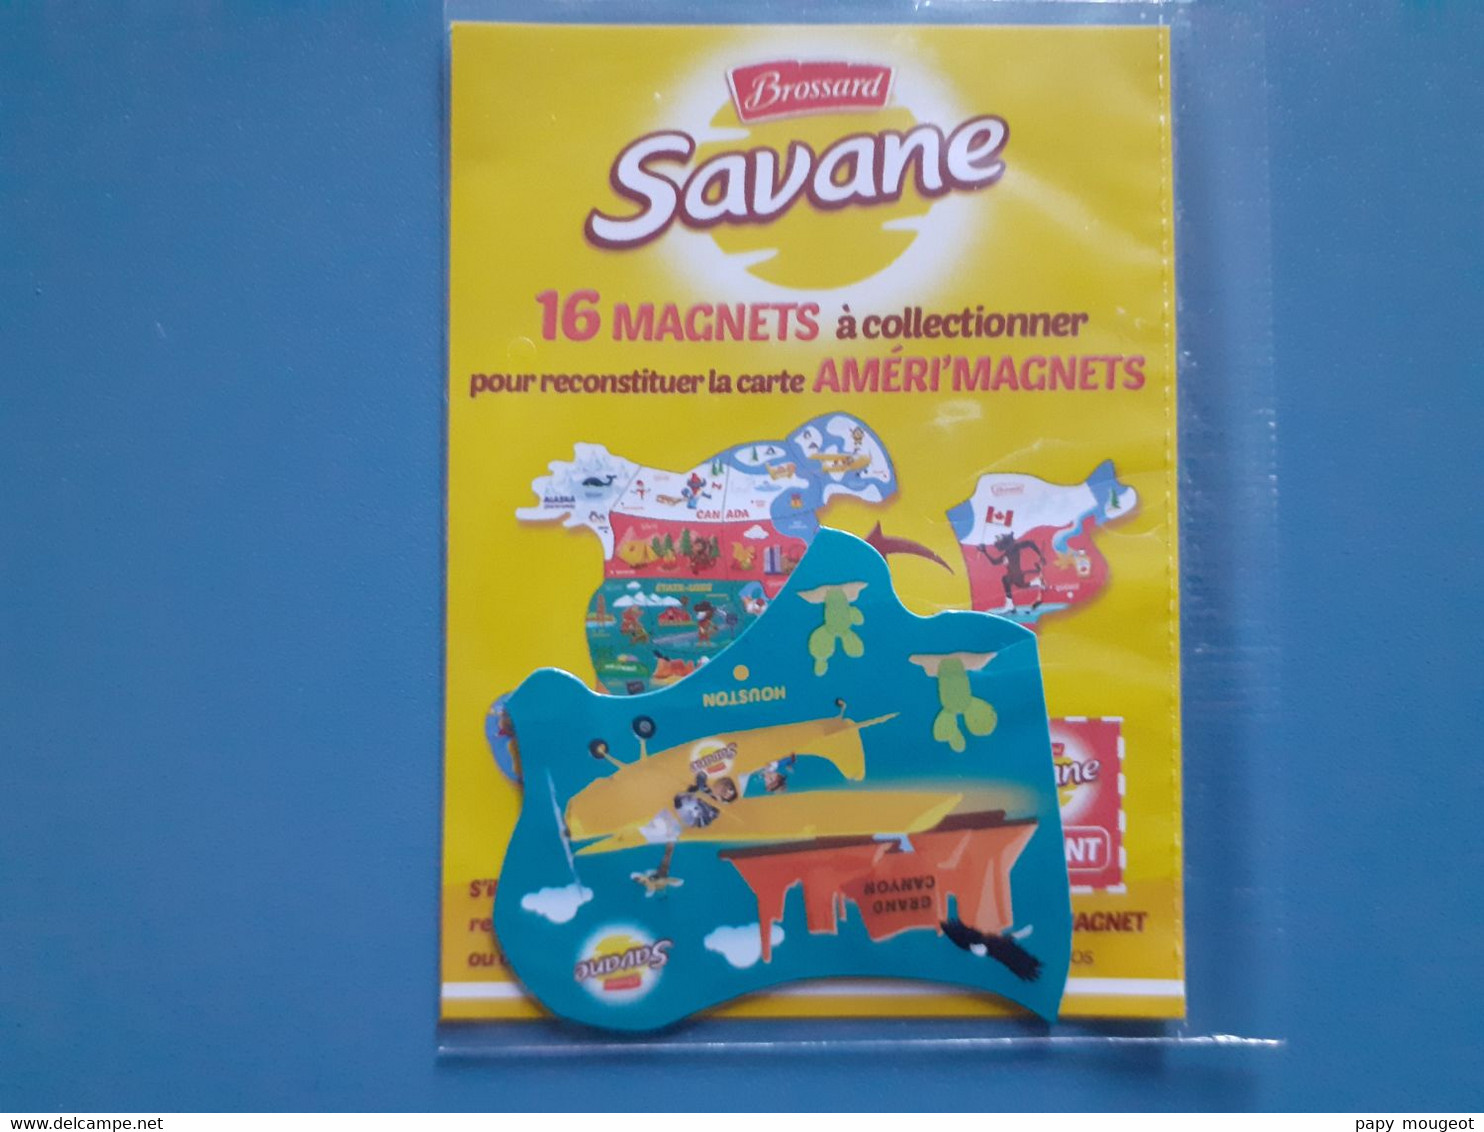 Brossard Savane - 16 Magnets Carte AMERI'MAGNETS - USA - Grand Canyon Houston - Publicitaires